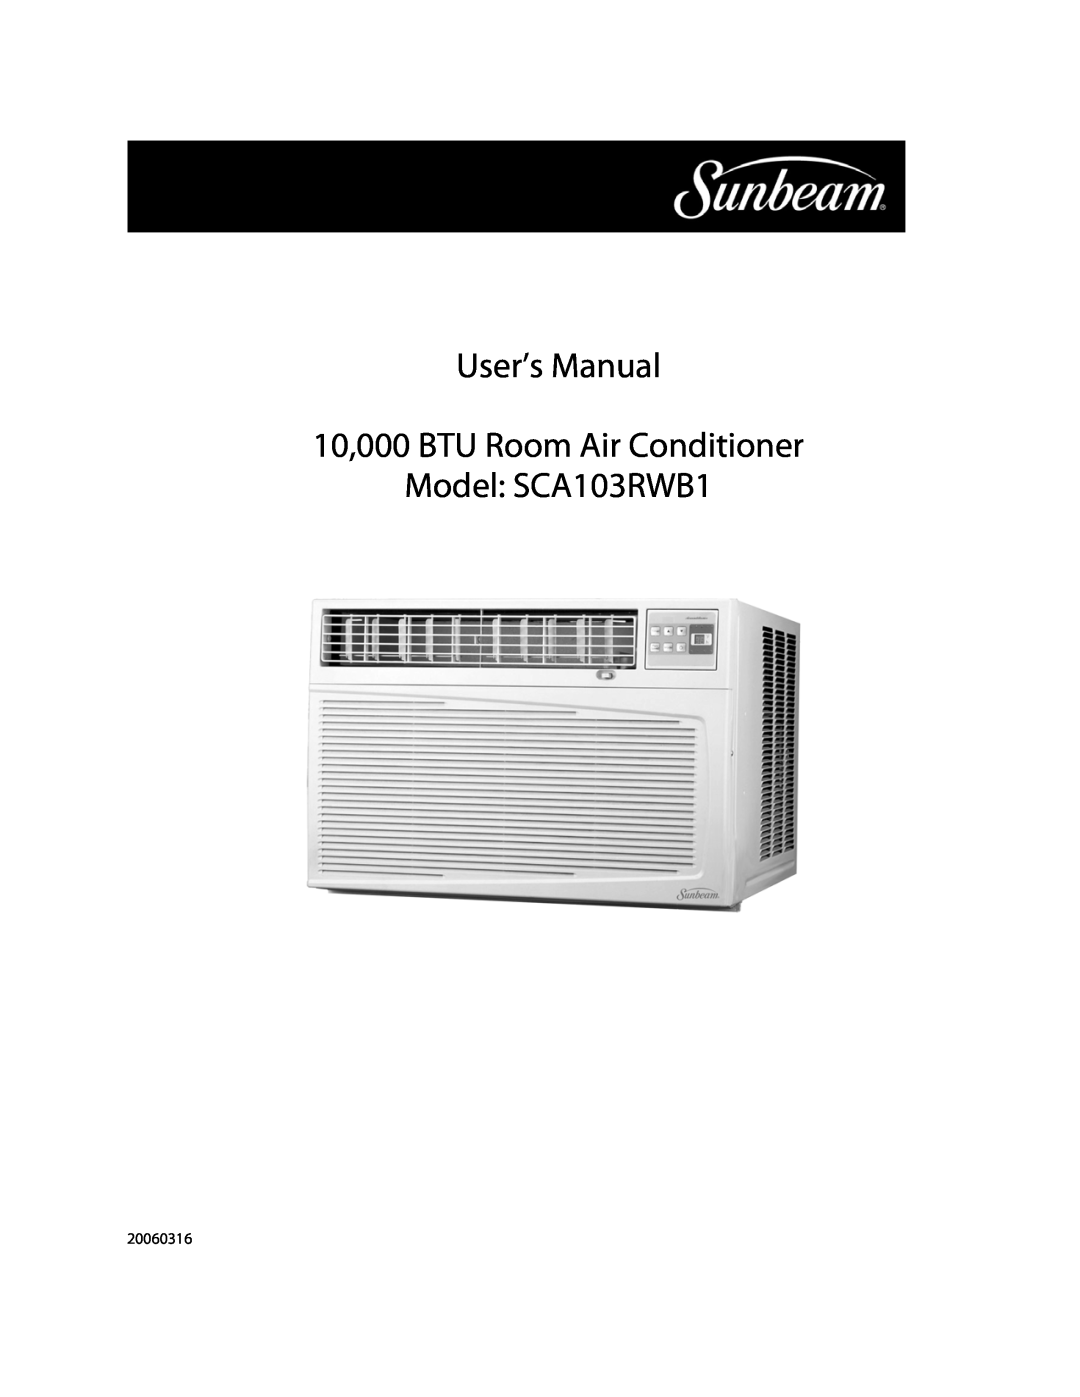 Sunbeam user manual User’s Manual 10,000 BTU Room Air Conditioner, Model SCA103RWB1, 20060316 